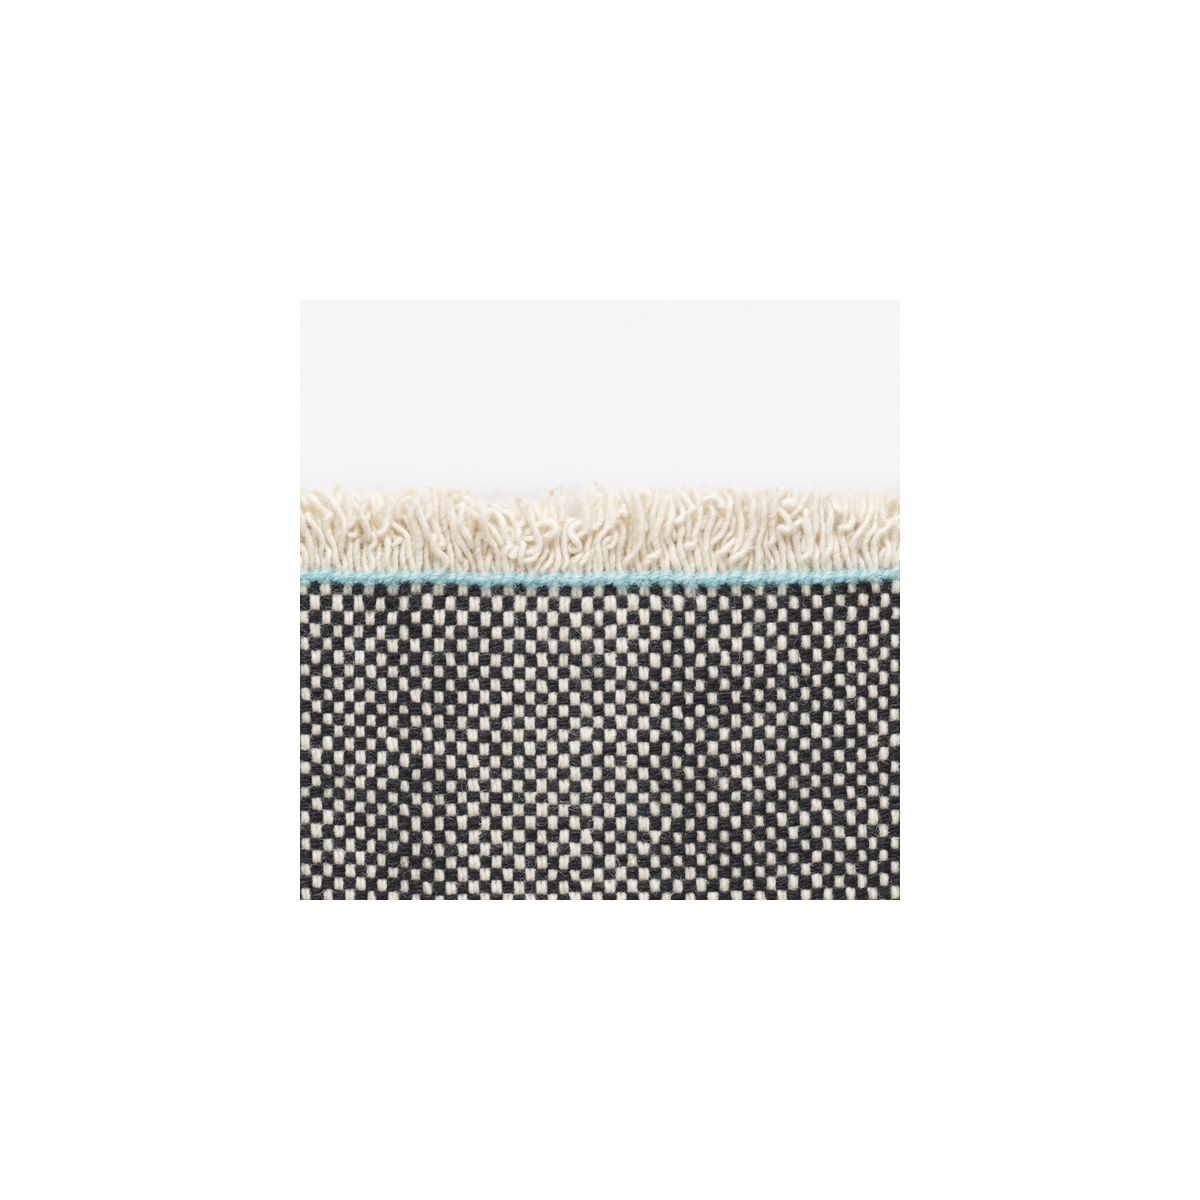 200x300cm - 0191 - Duotone tapis